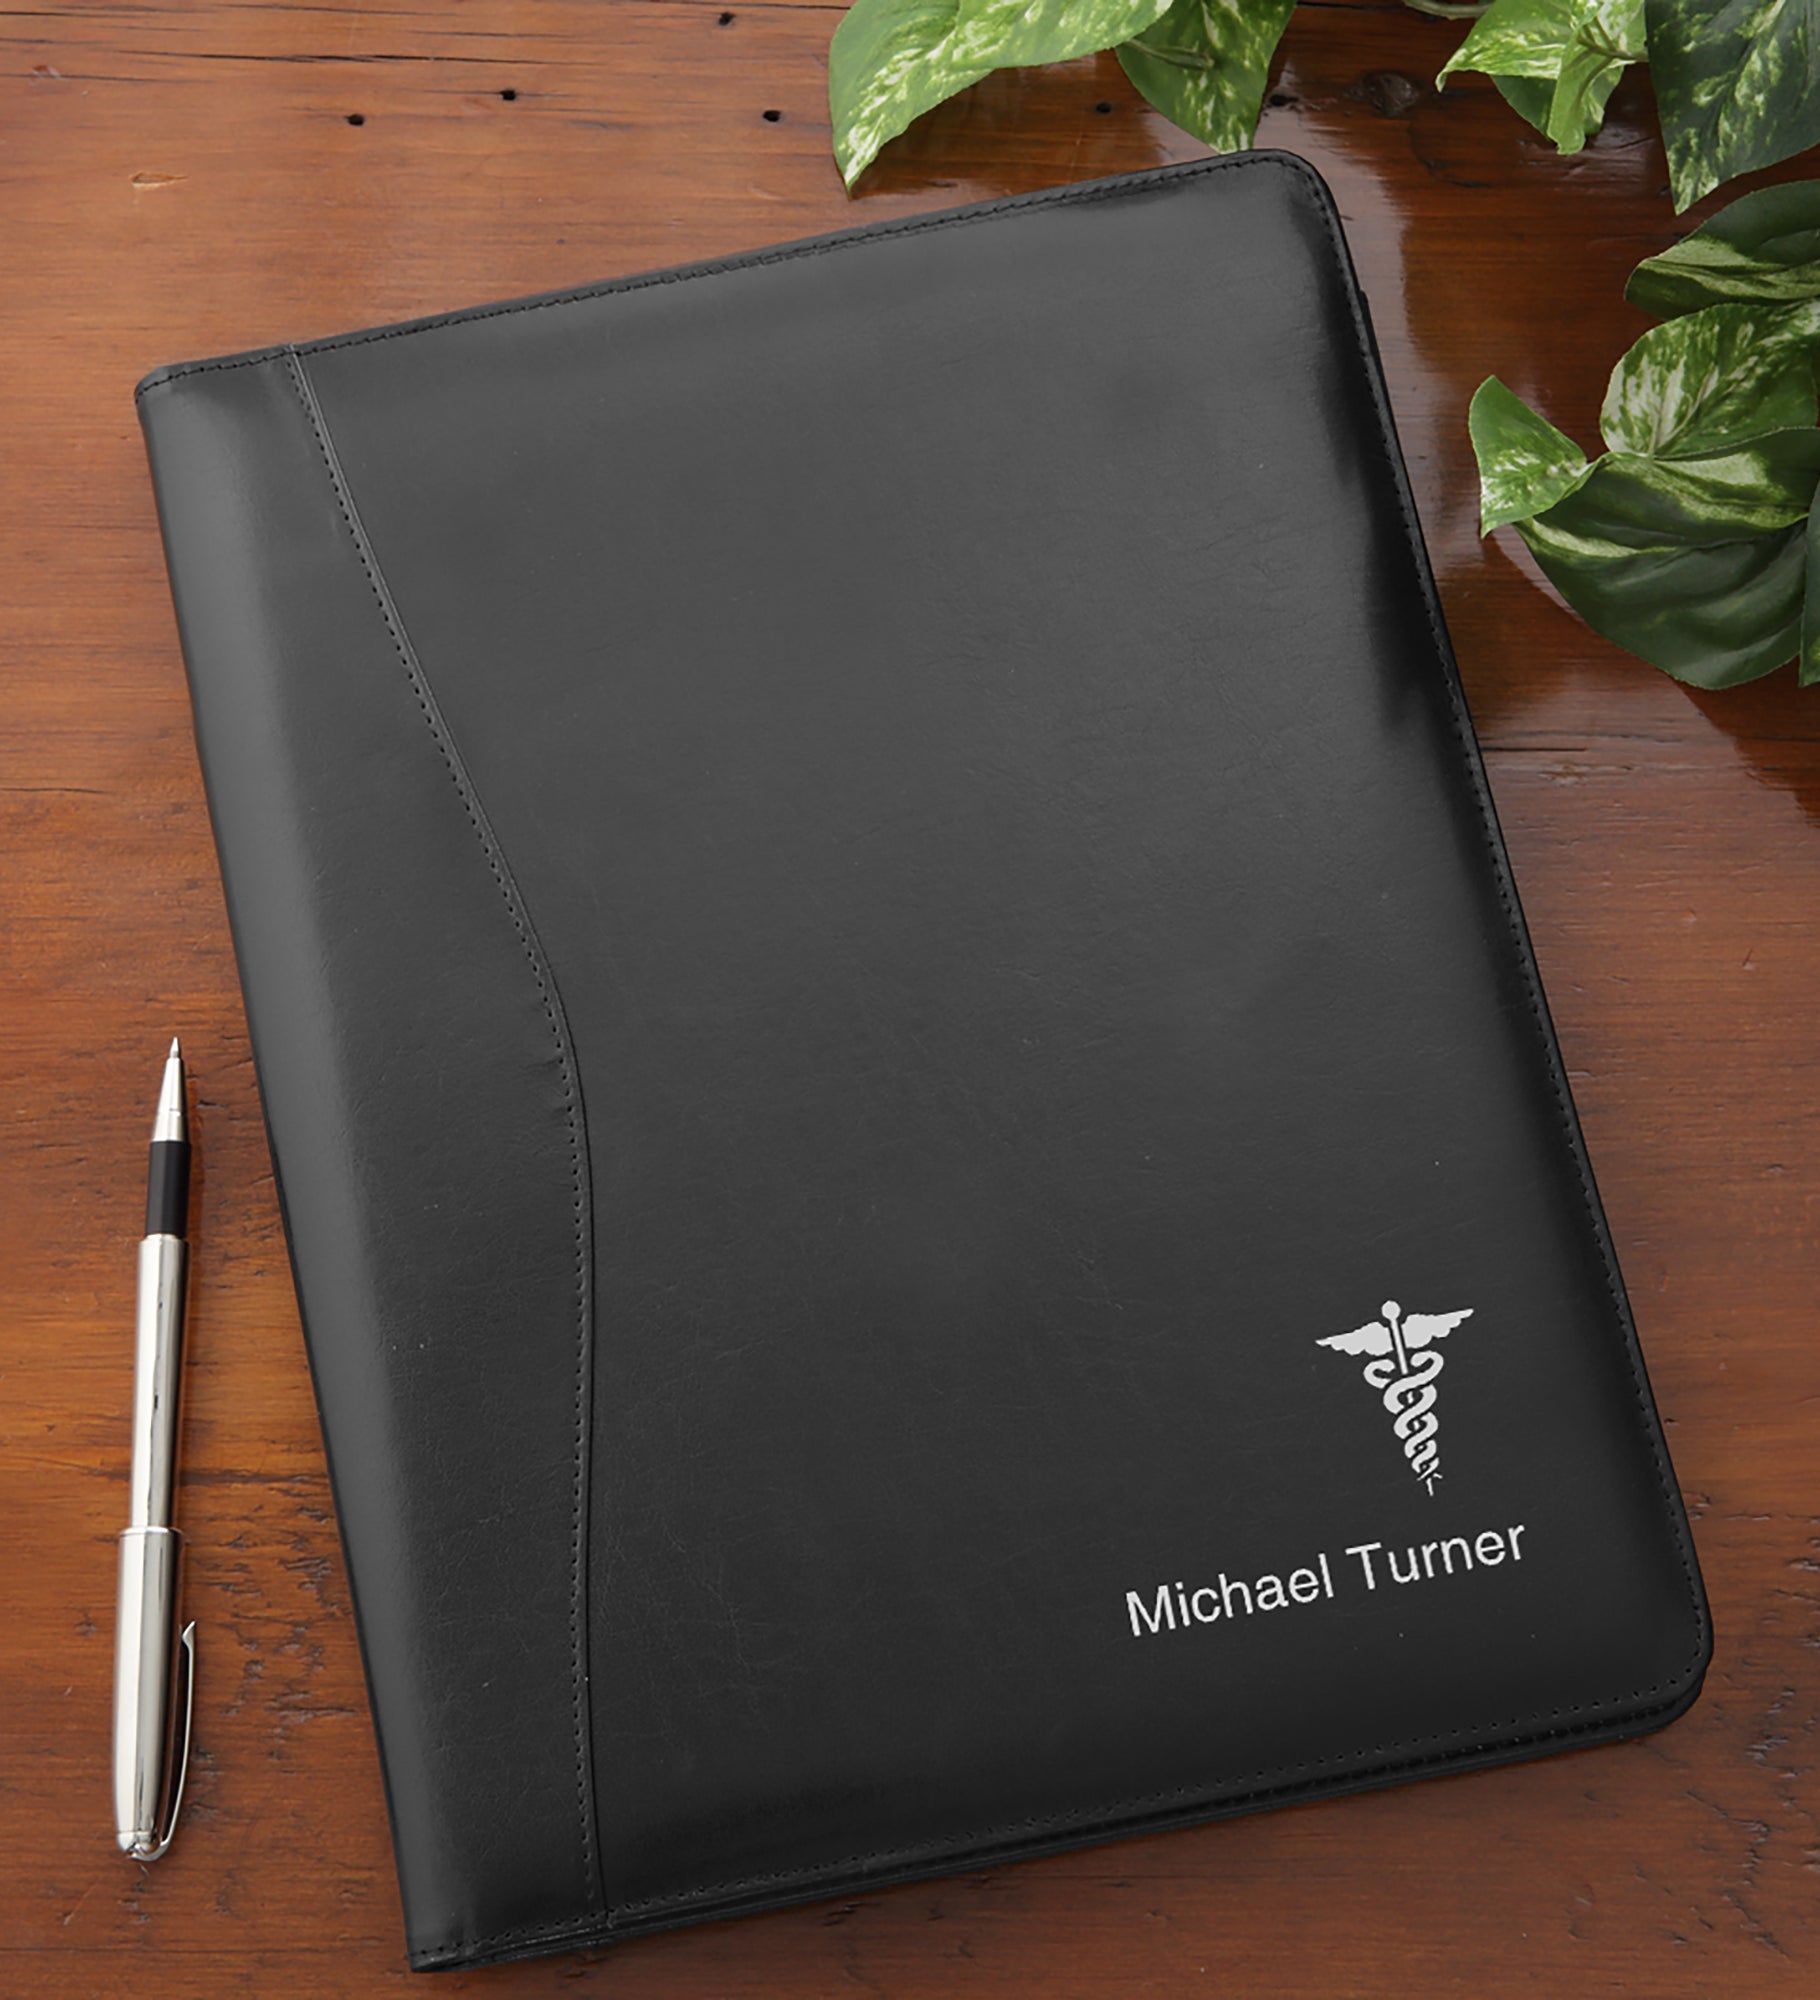 Medical Notes Personalized Black Leather Portfolio